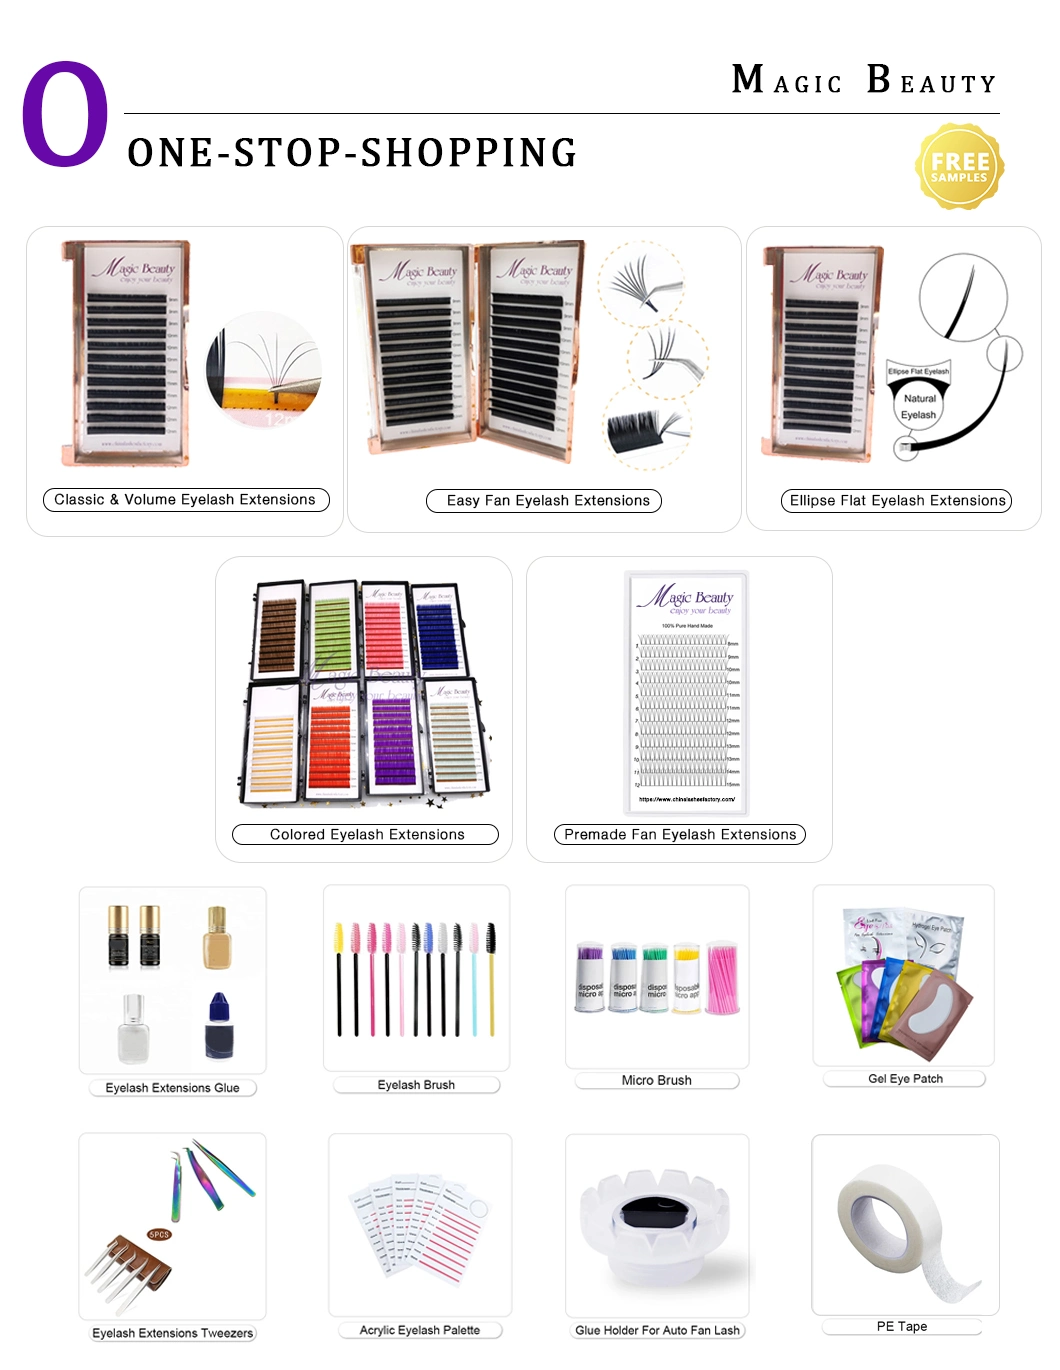 Make up Volume Eyelash 0.15mm D Curl Single Individual Colored Eyelash Extensions with Free Box